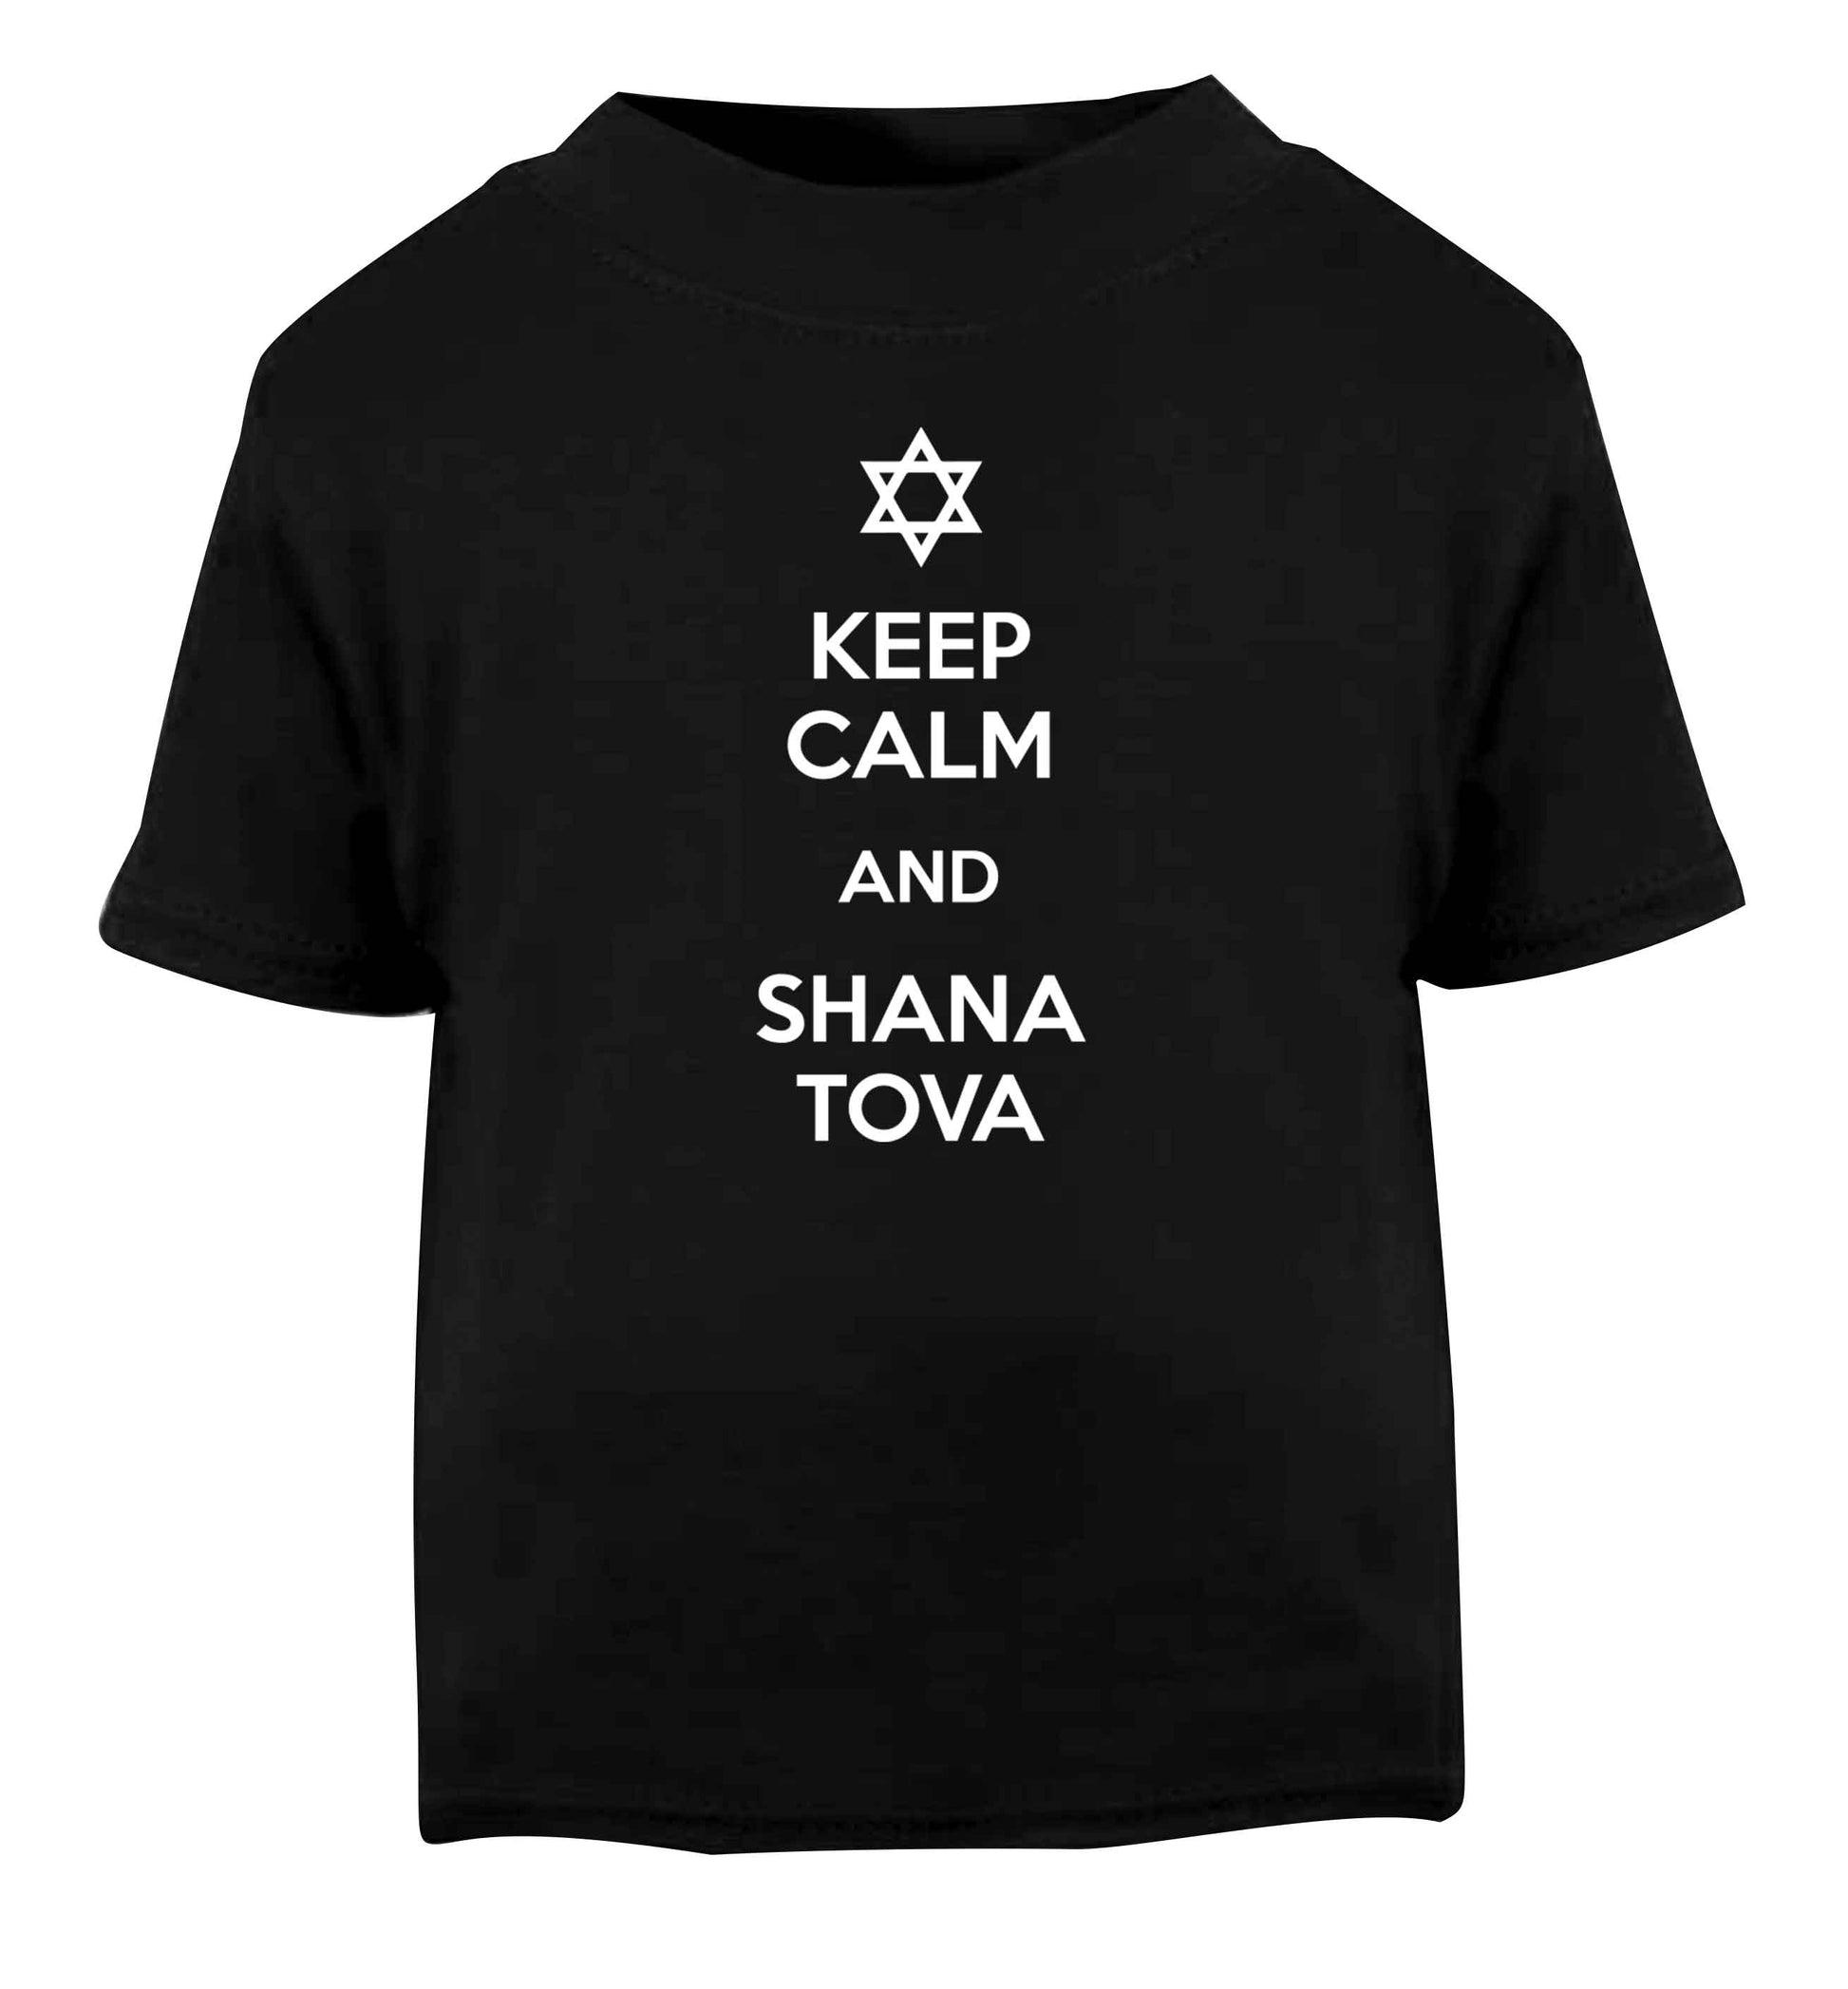 Keep calm and shana tova Black Baby Toddler Tshirt 2 years